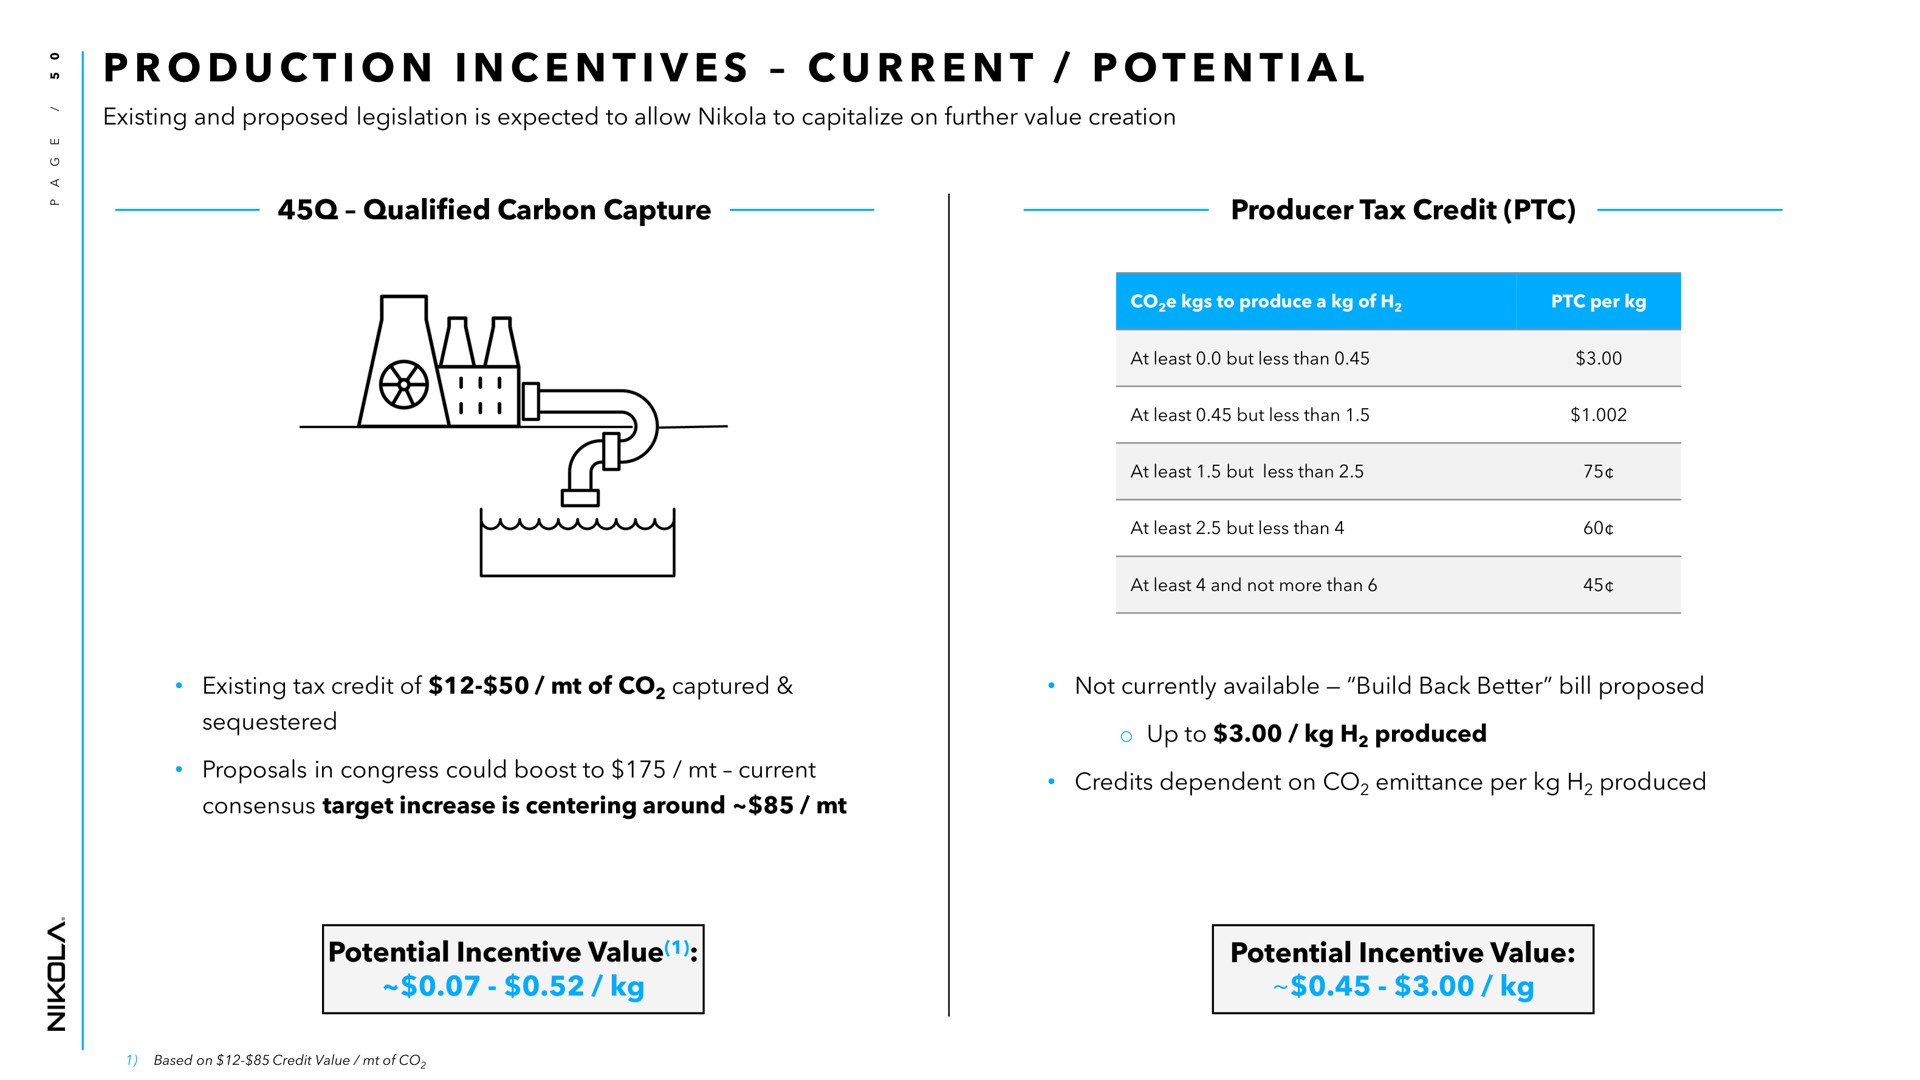 i i i i a production incentives current potential qualified carbon capture on pate | Nikola